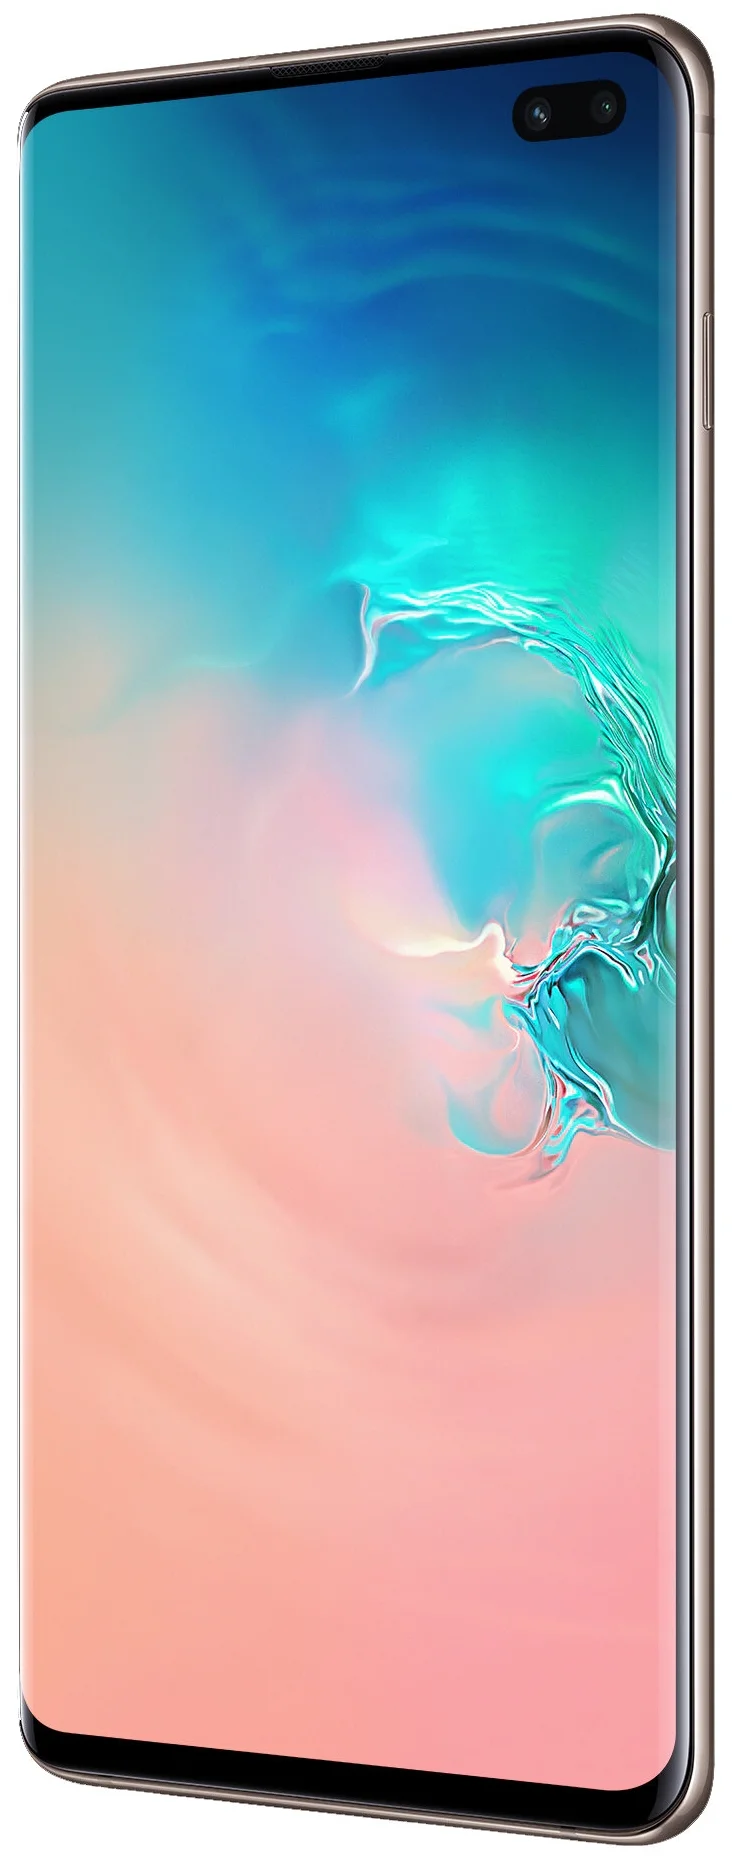 Samsung Galaxy S10+ Ceramic 8/512GB - вес: 175 г